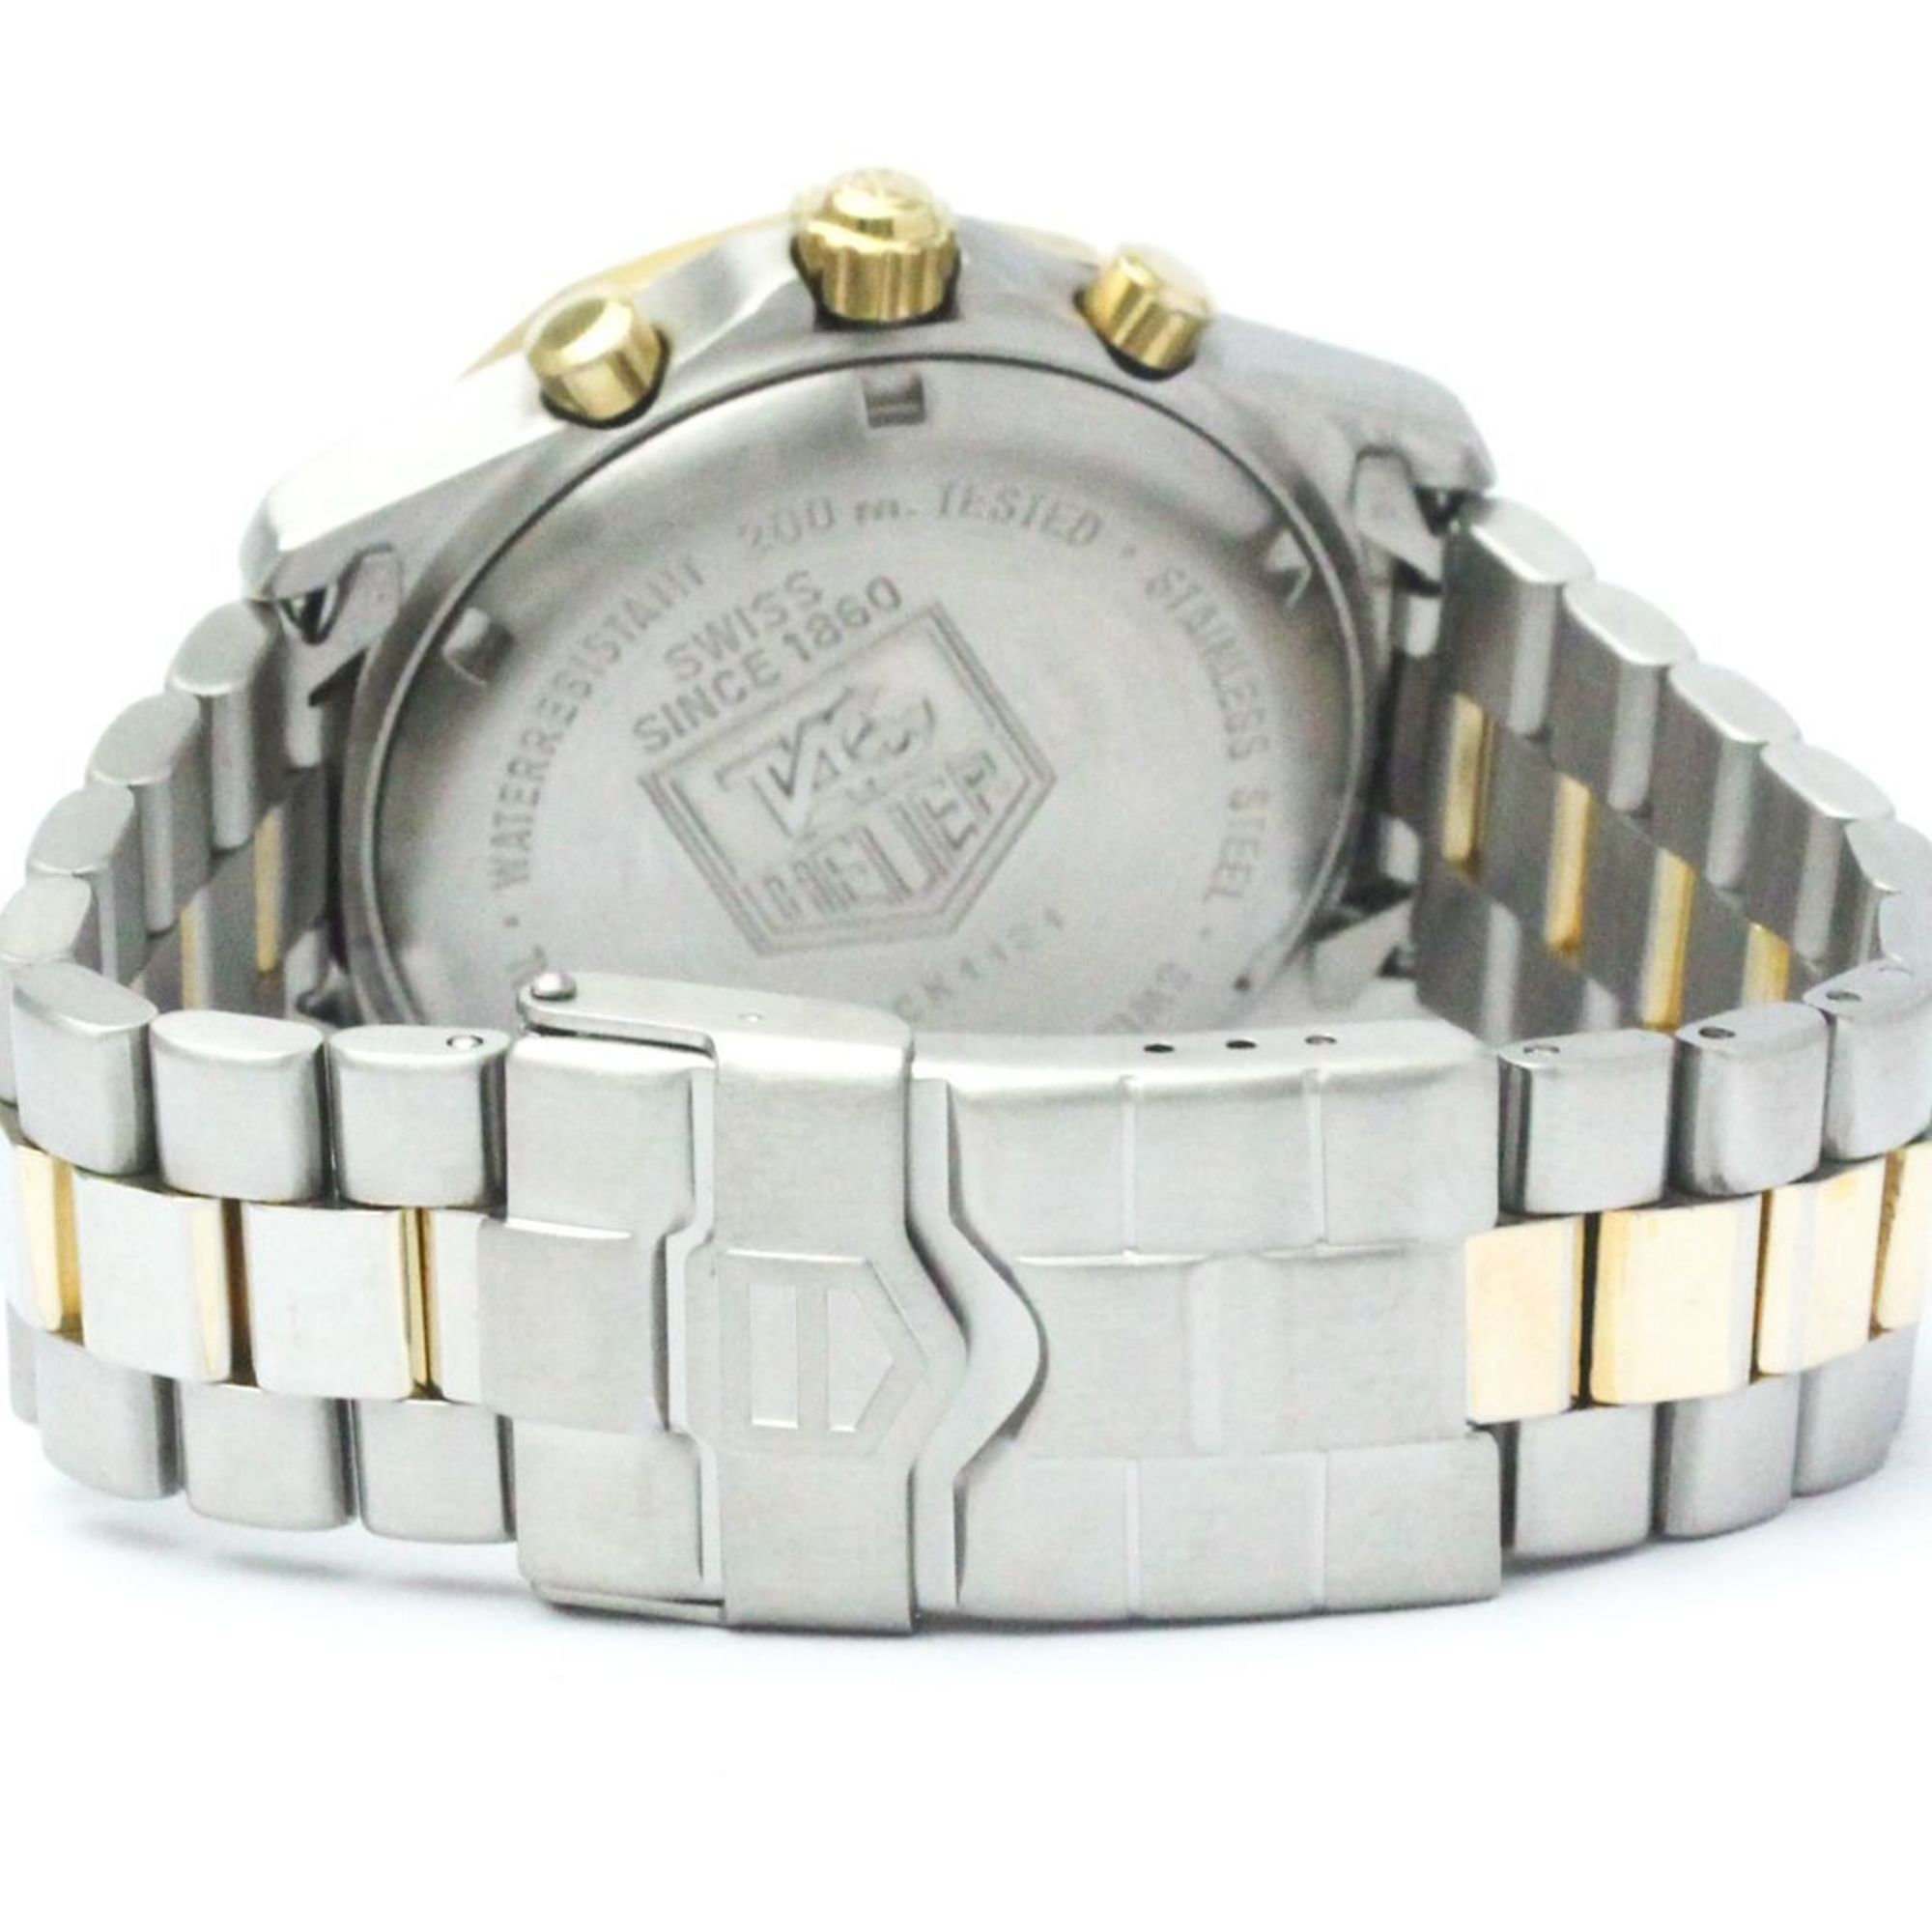 TAG HEUER 2000 Classic Professional Chronograph Quartz Watch CK1121 BF562895